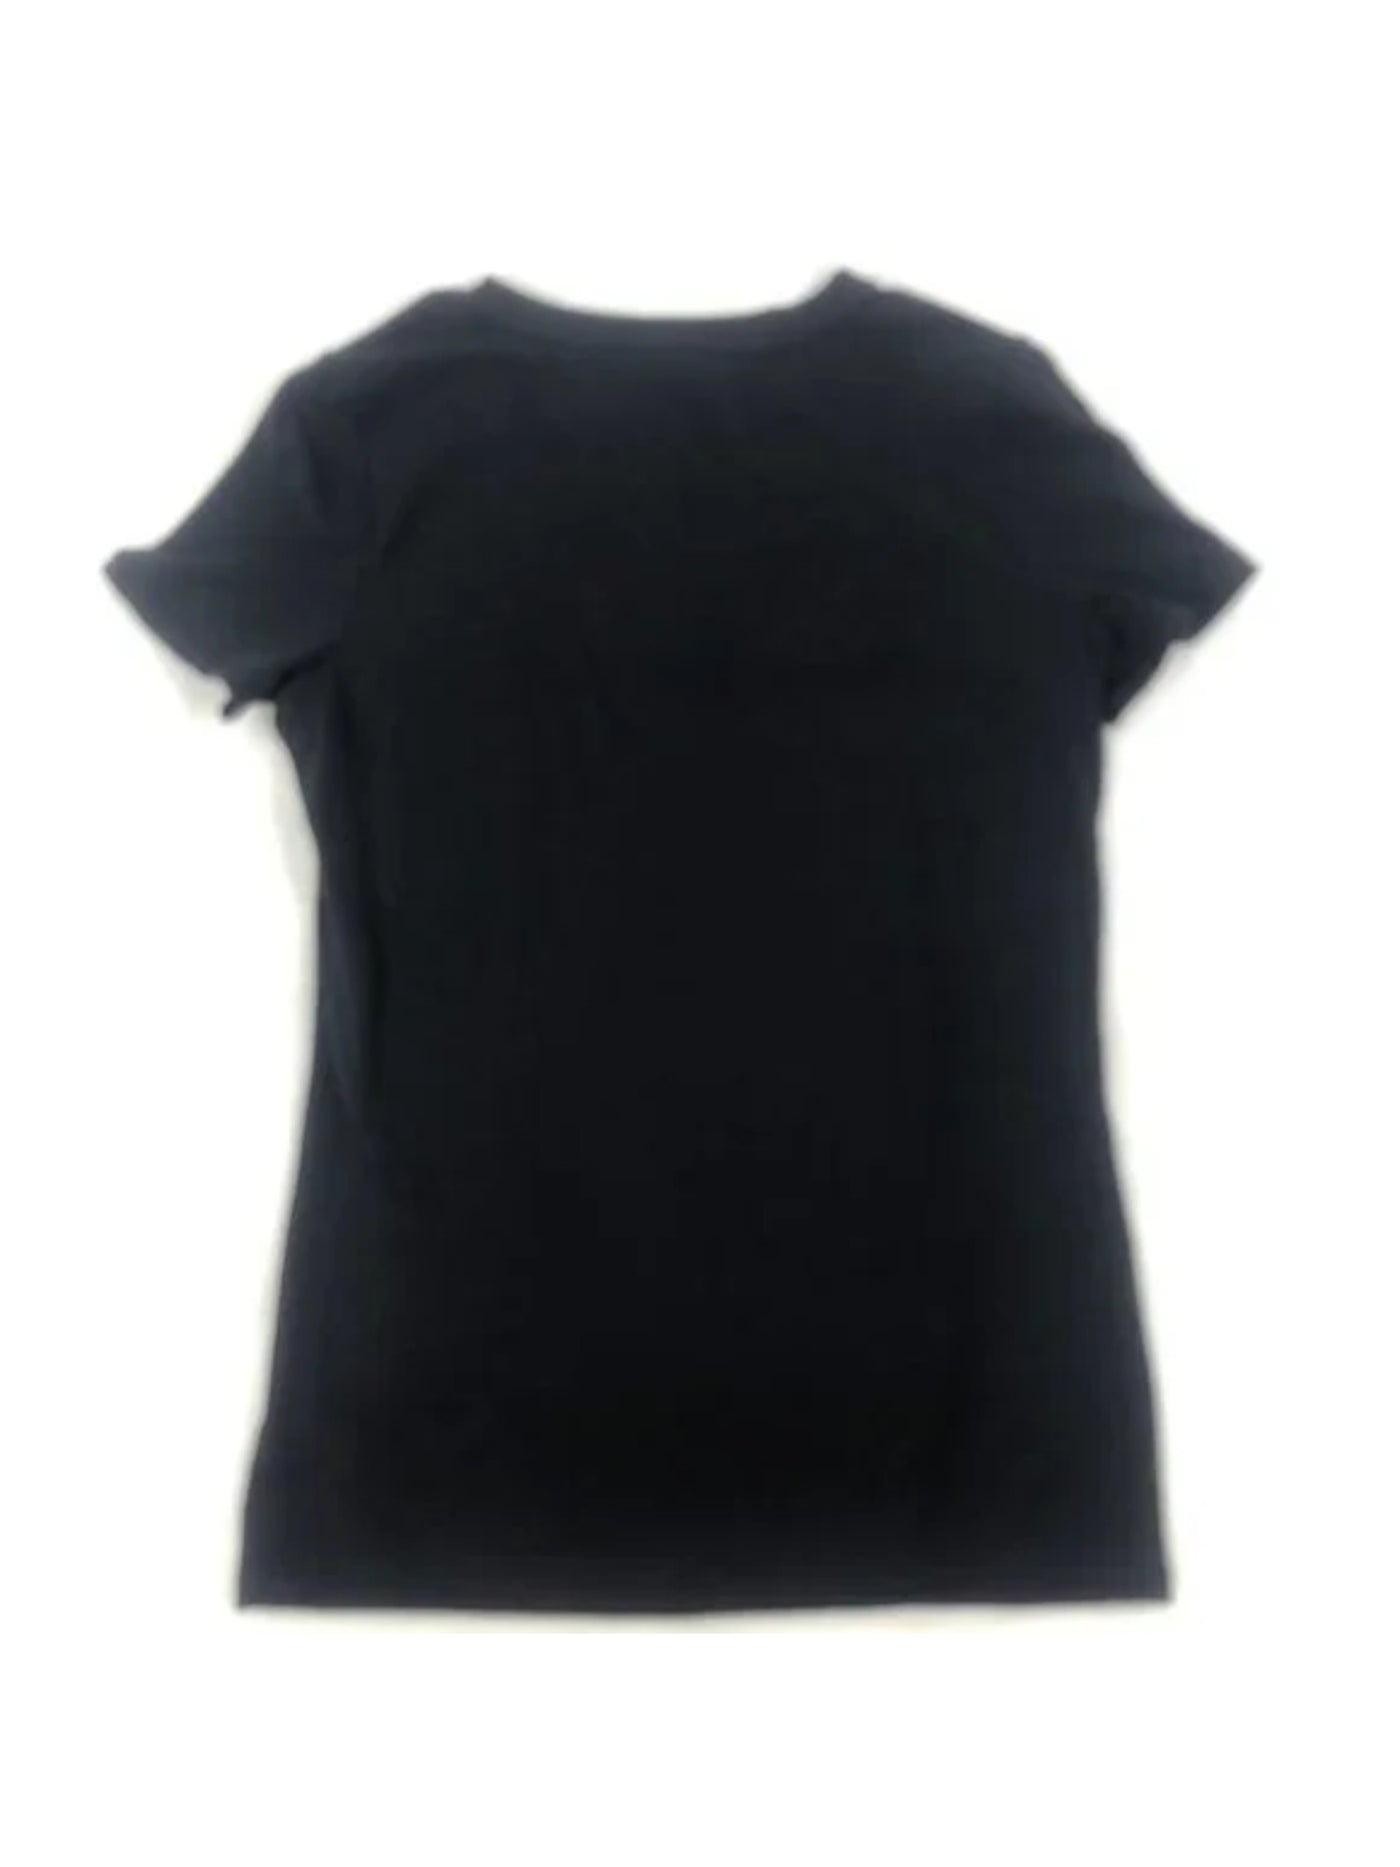 MICHAEL MICHAEL KORS Womens Black Short Sleeve V Neck T-Shirt Plus 1X